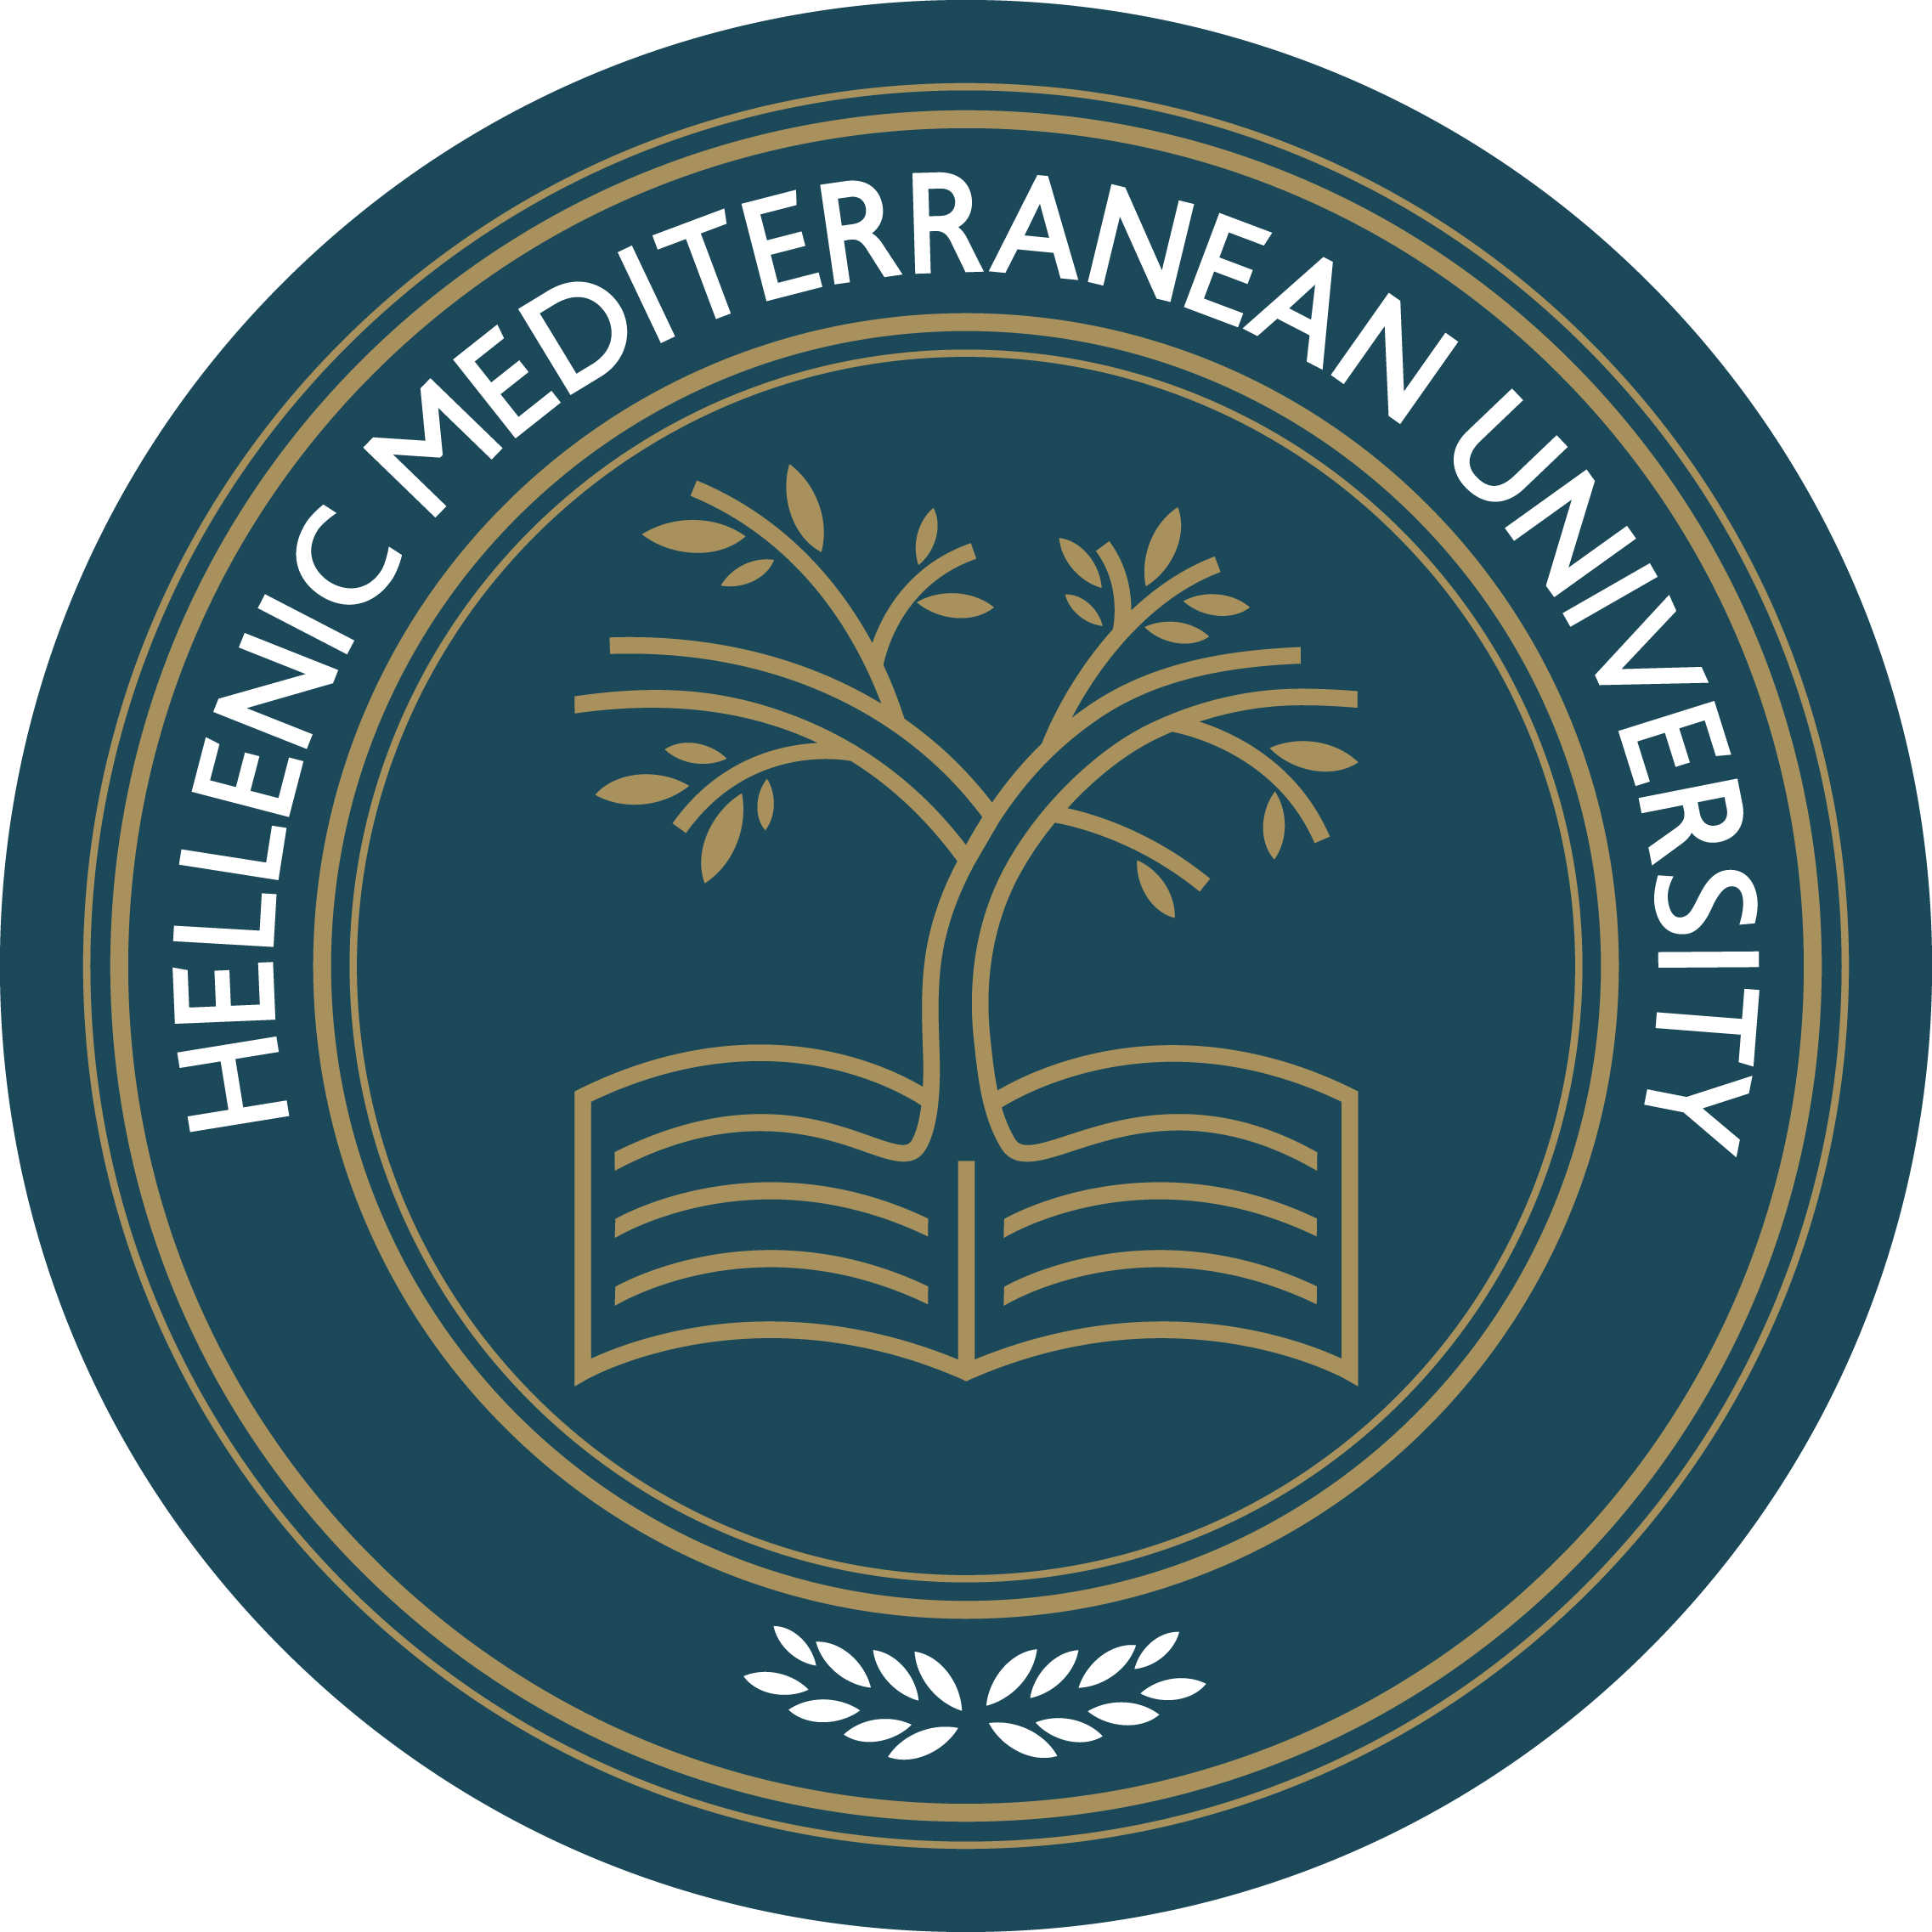 Hellenic Mediterranean University